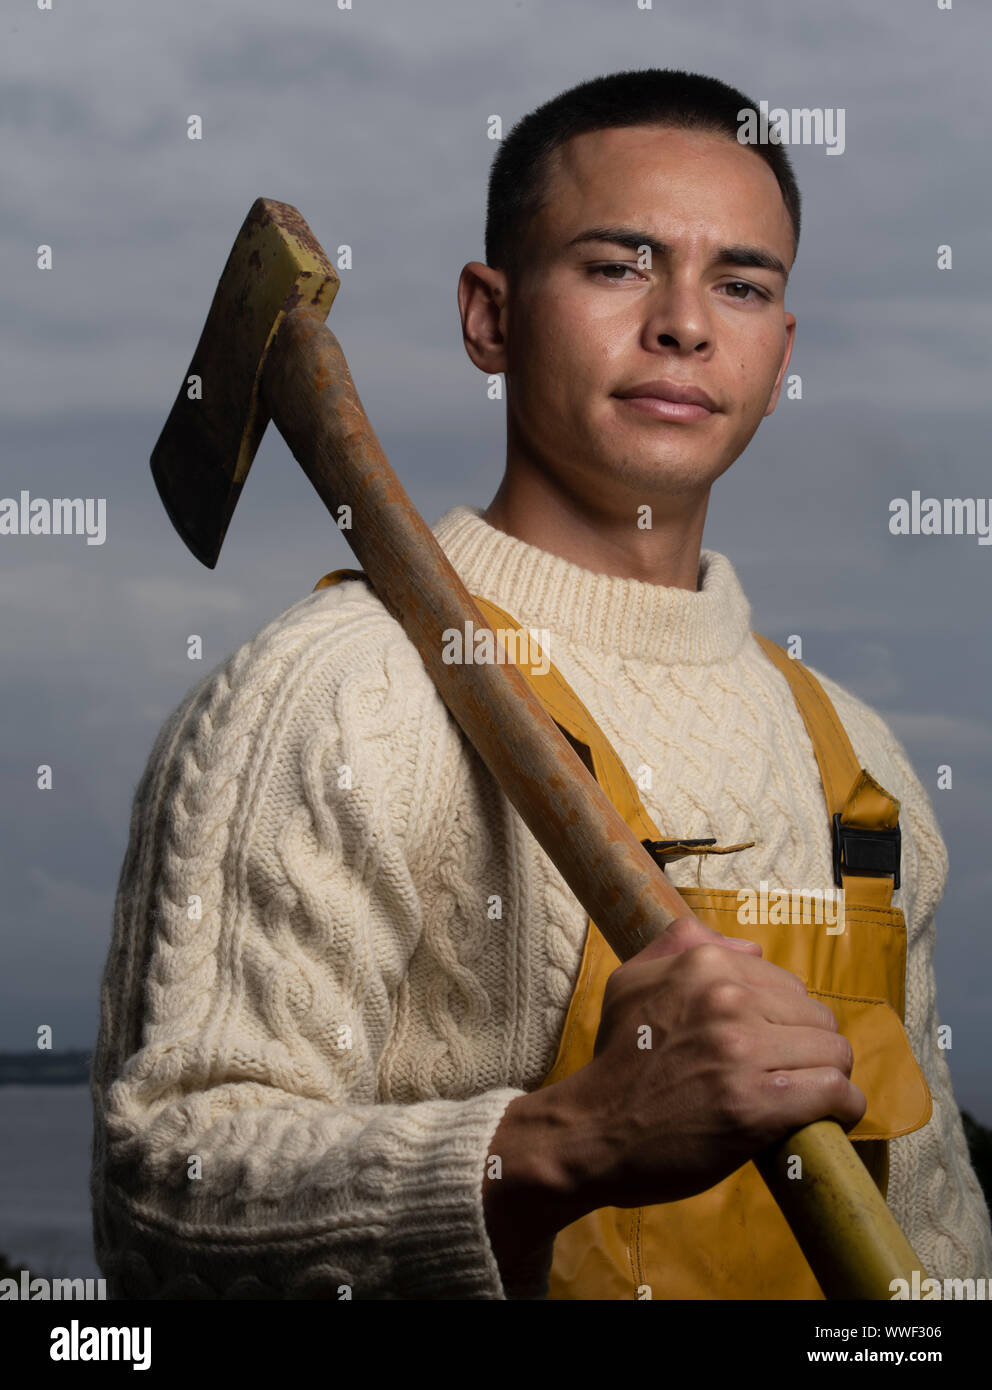 Man with axe Stock Photo